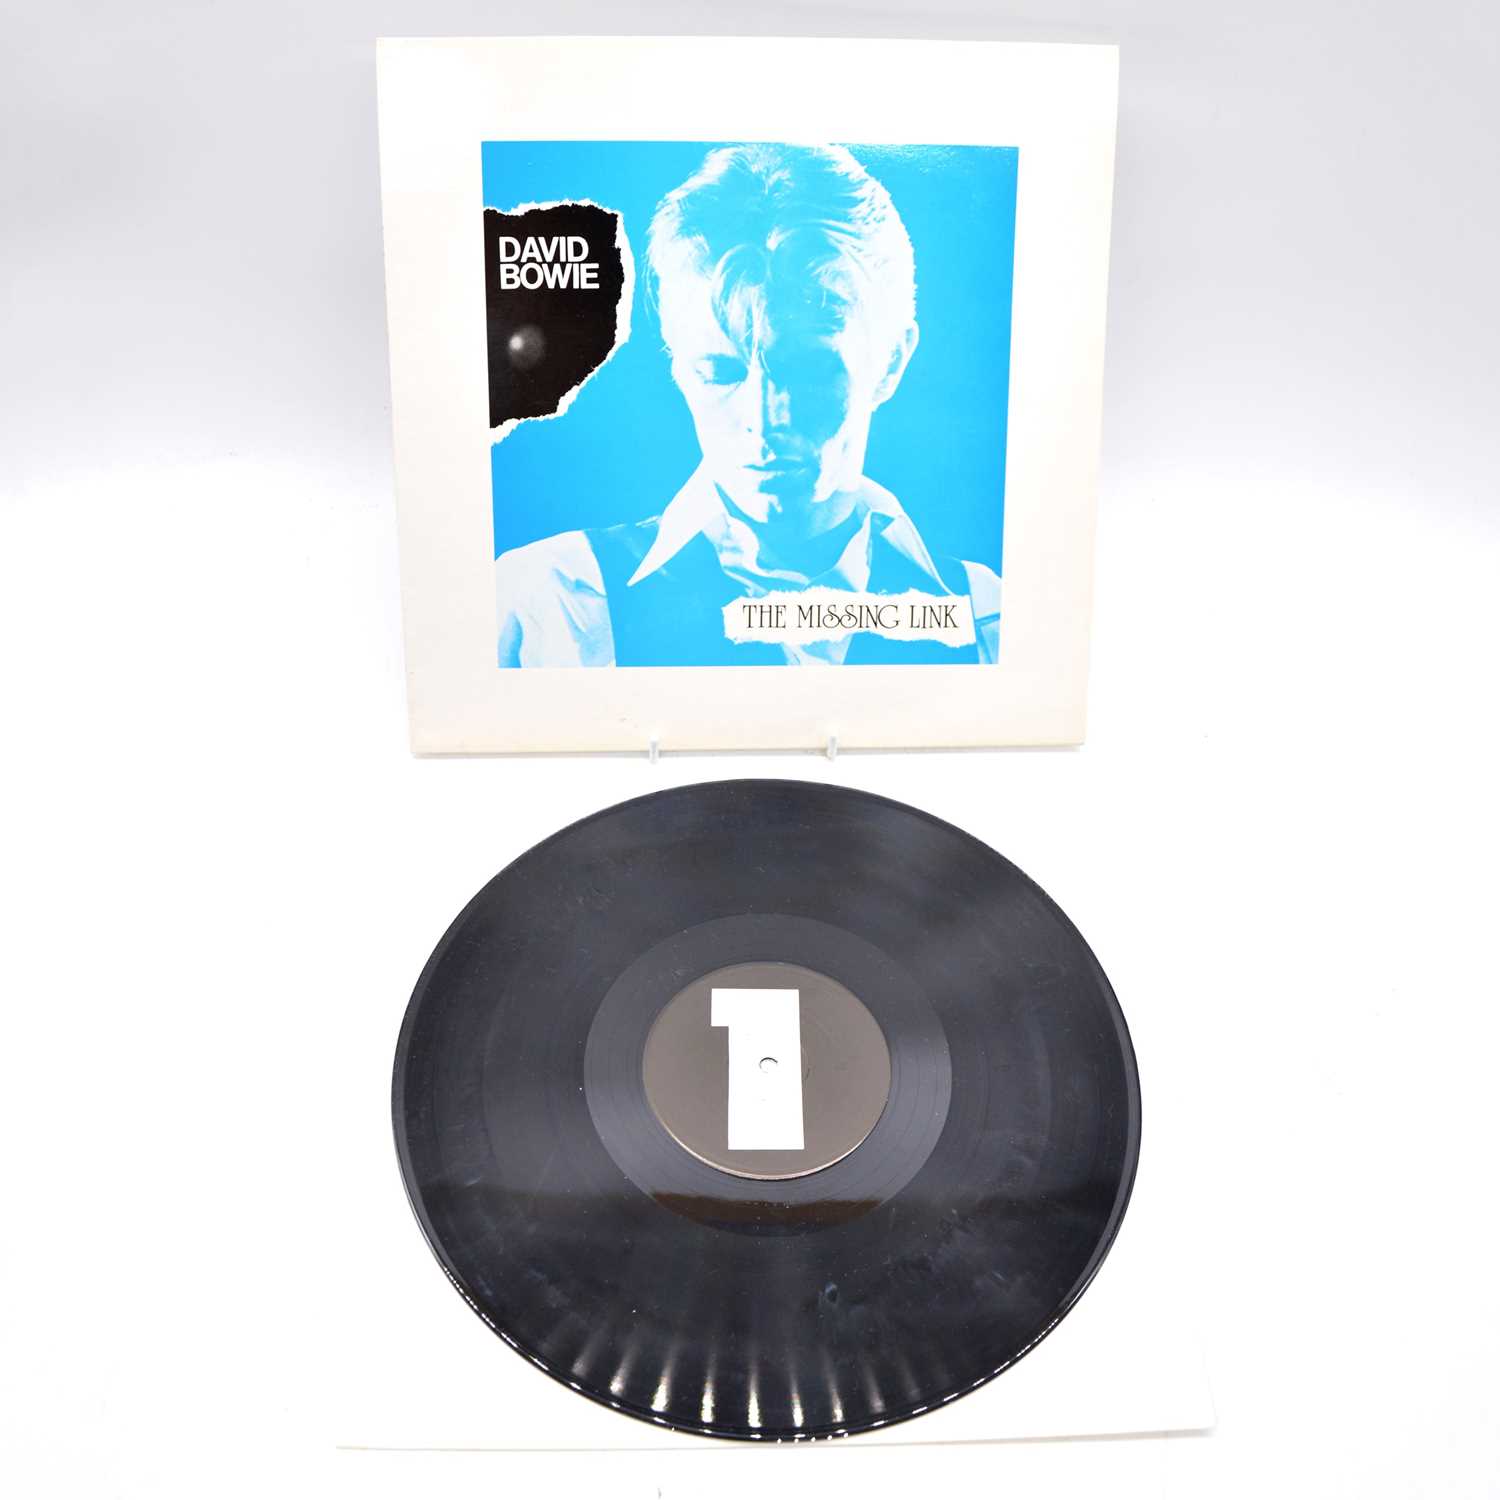 Lot 28 - David Bowie LP vinyl record, The Missing Link